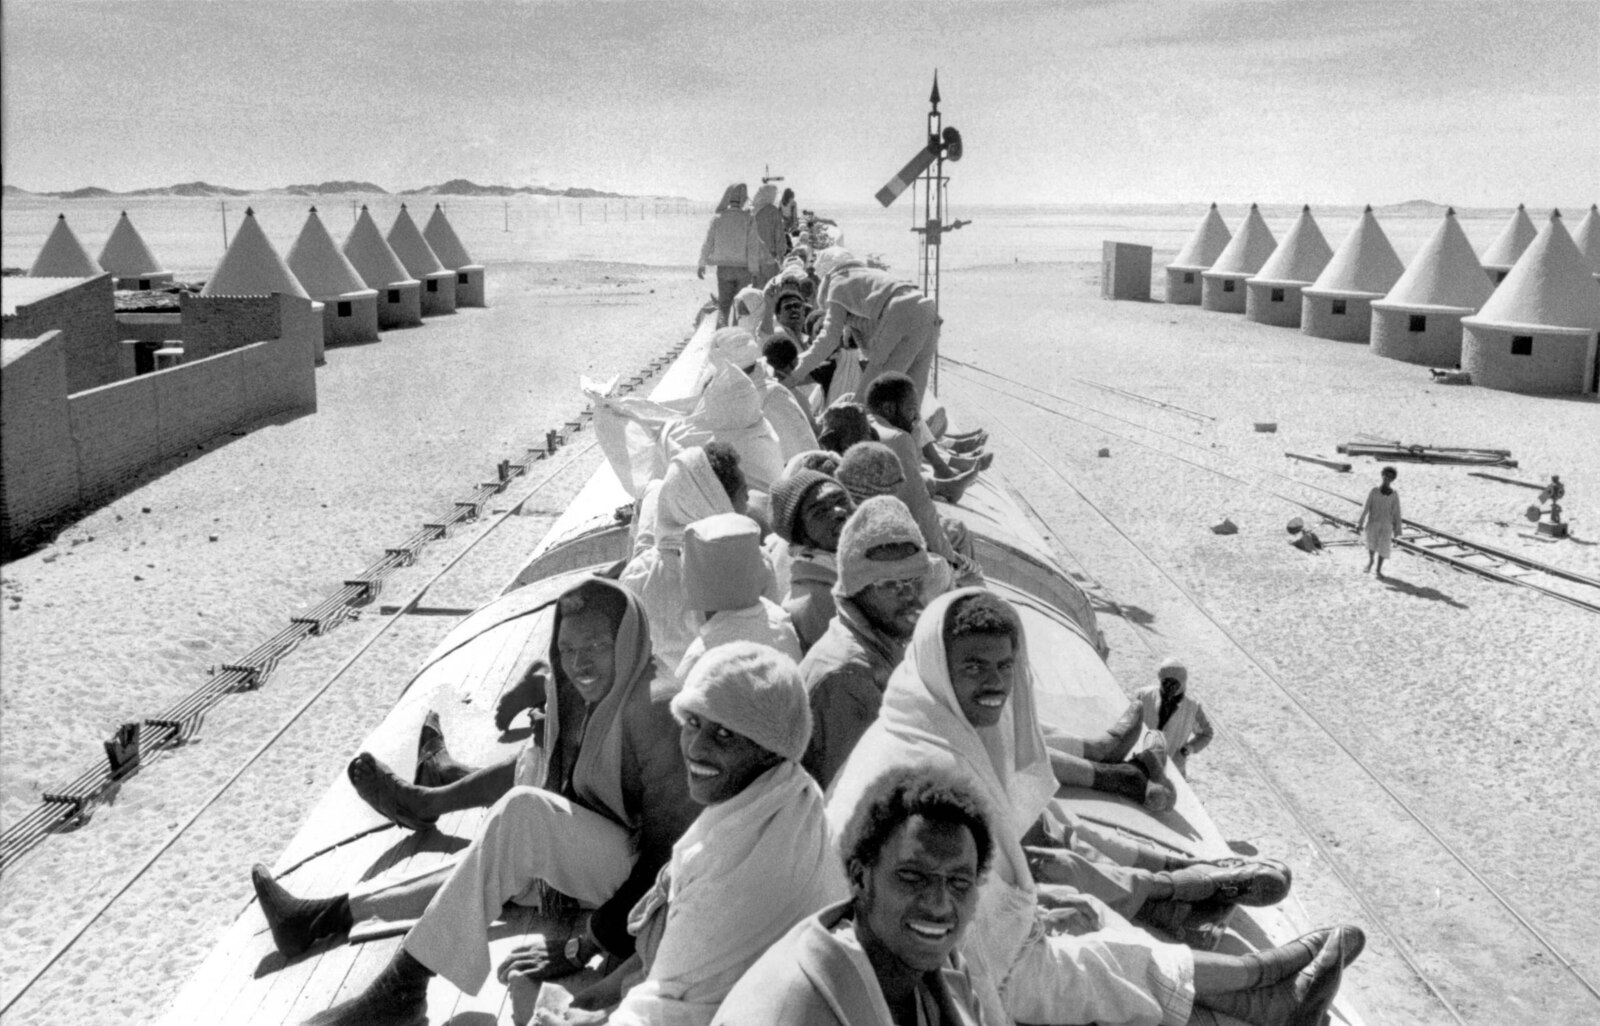 Sudan, Nile province 1987